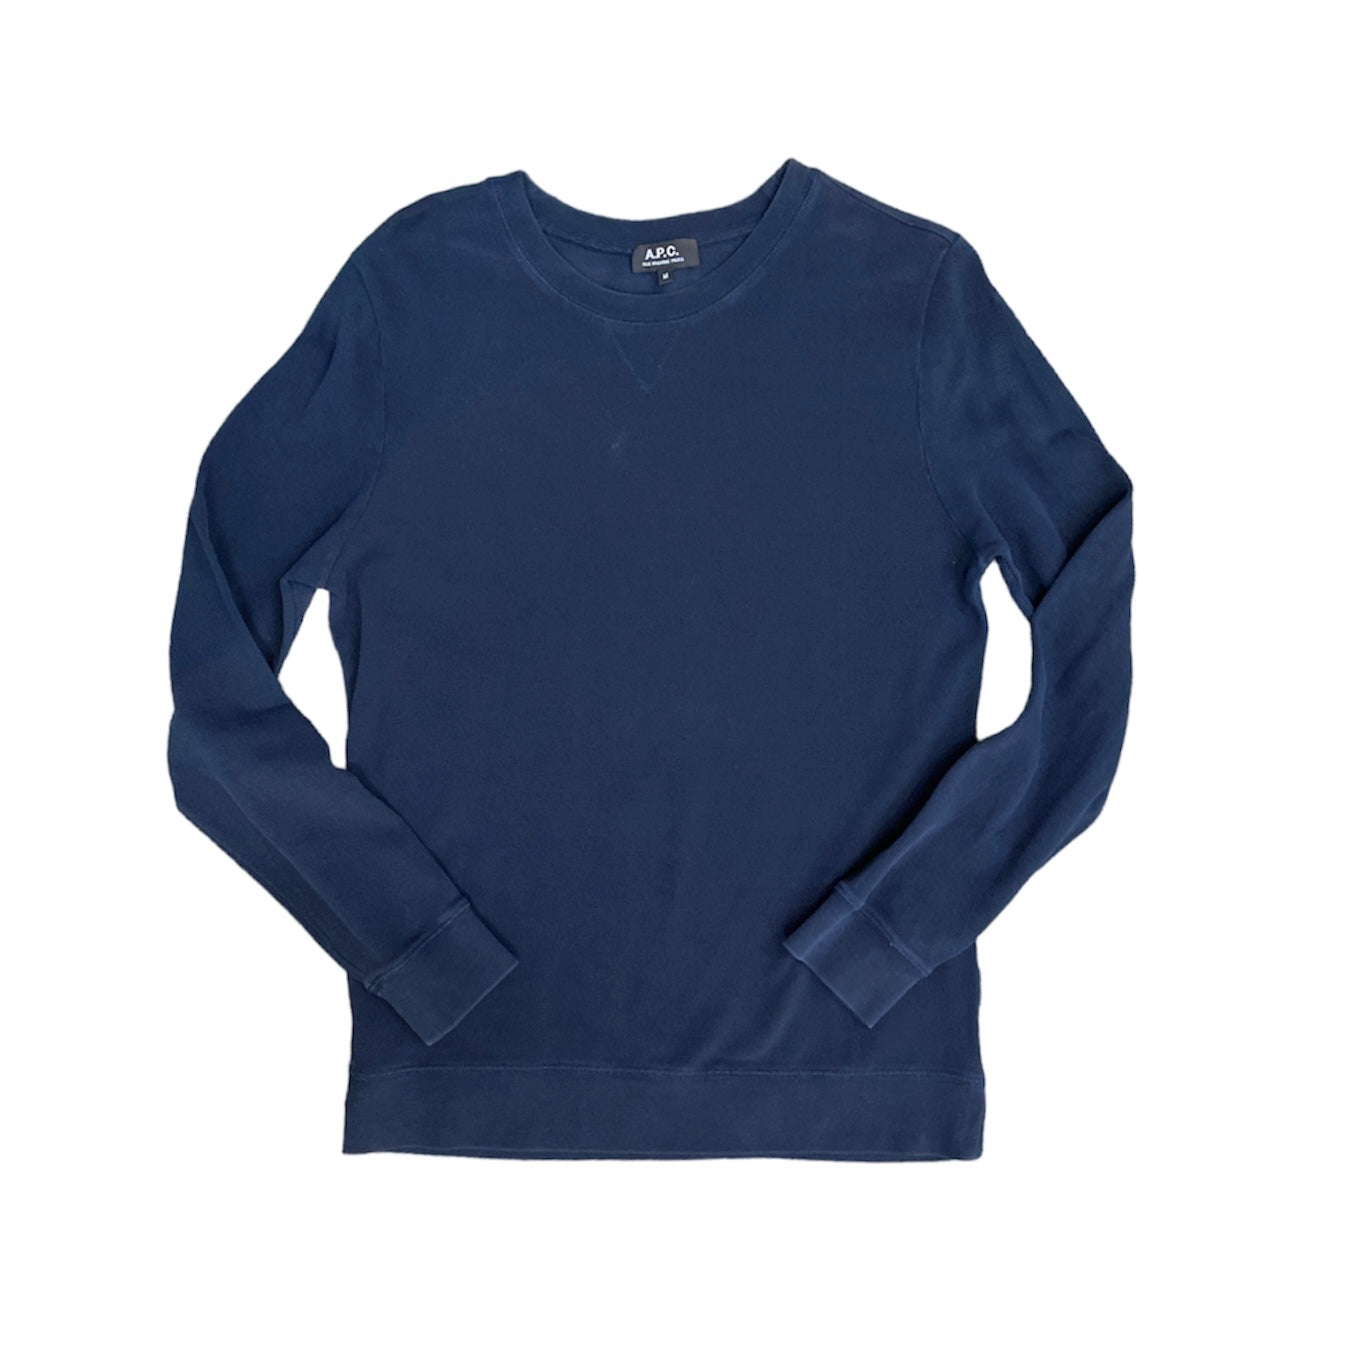 A.P.C. Knitted Sweatshirt